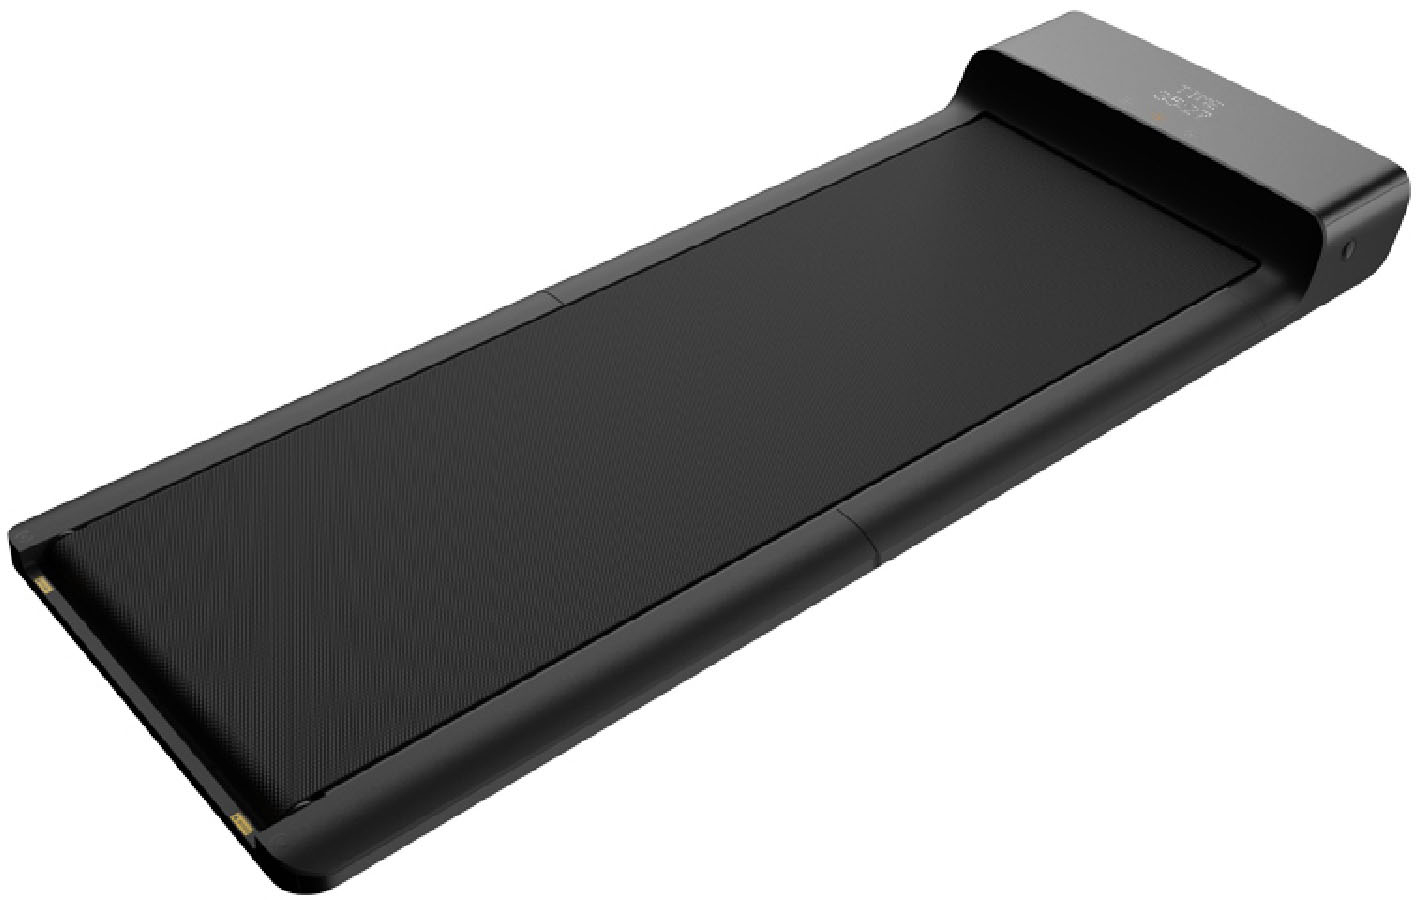 Buy Fortis Walking Pad Foldable Smart Treadmill T1 Pro Online